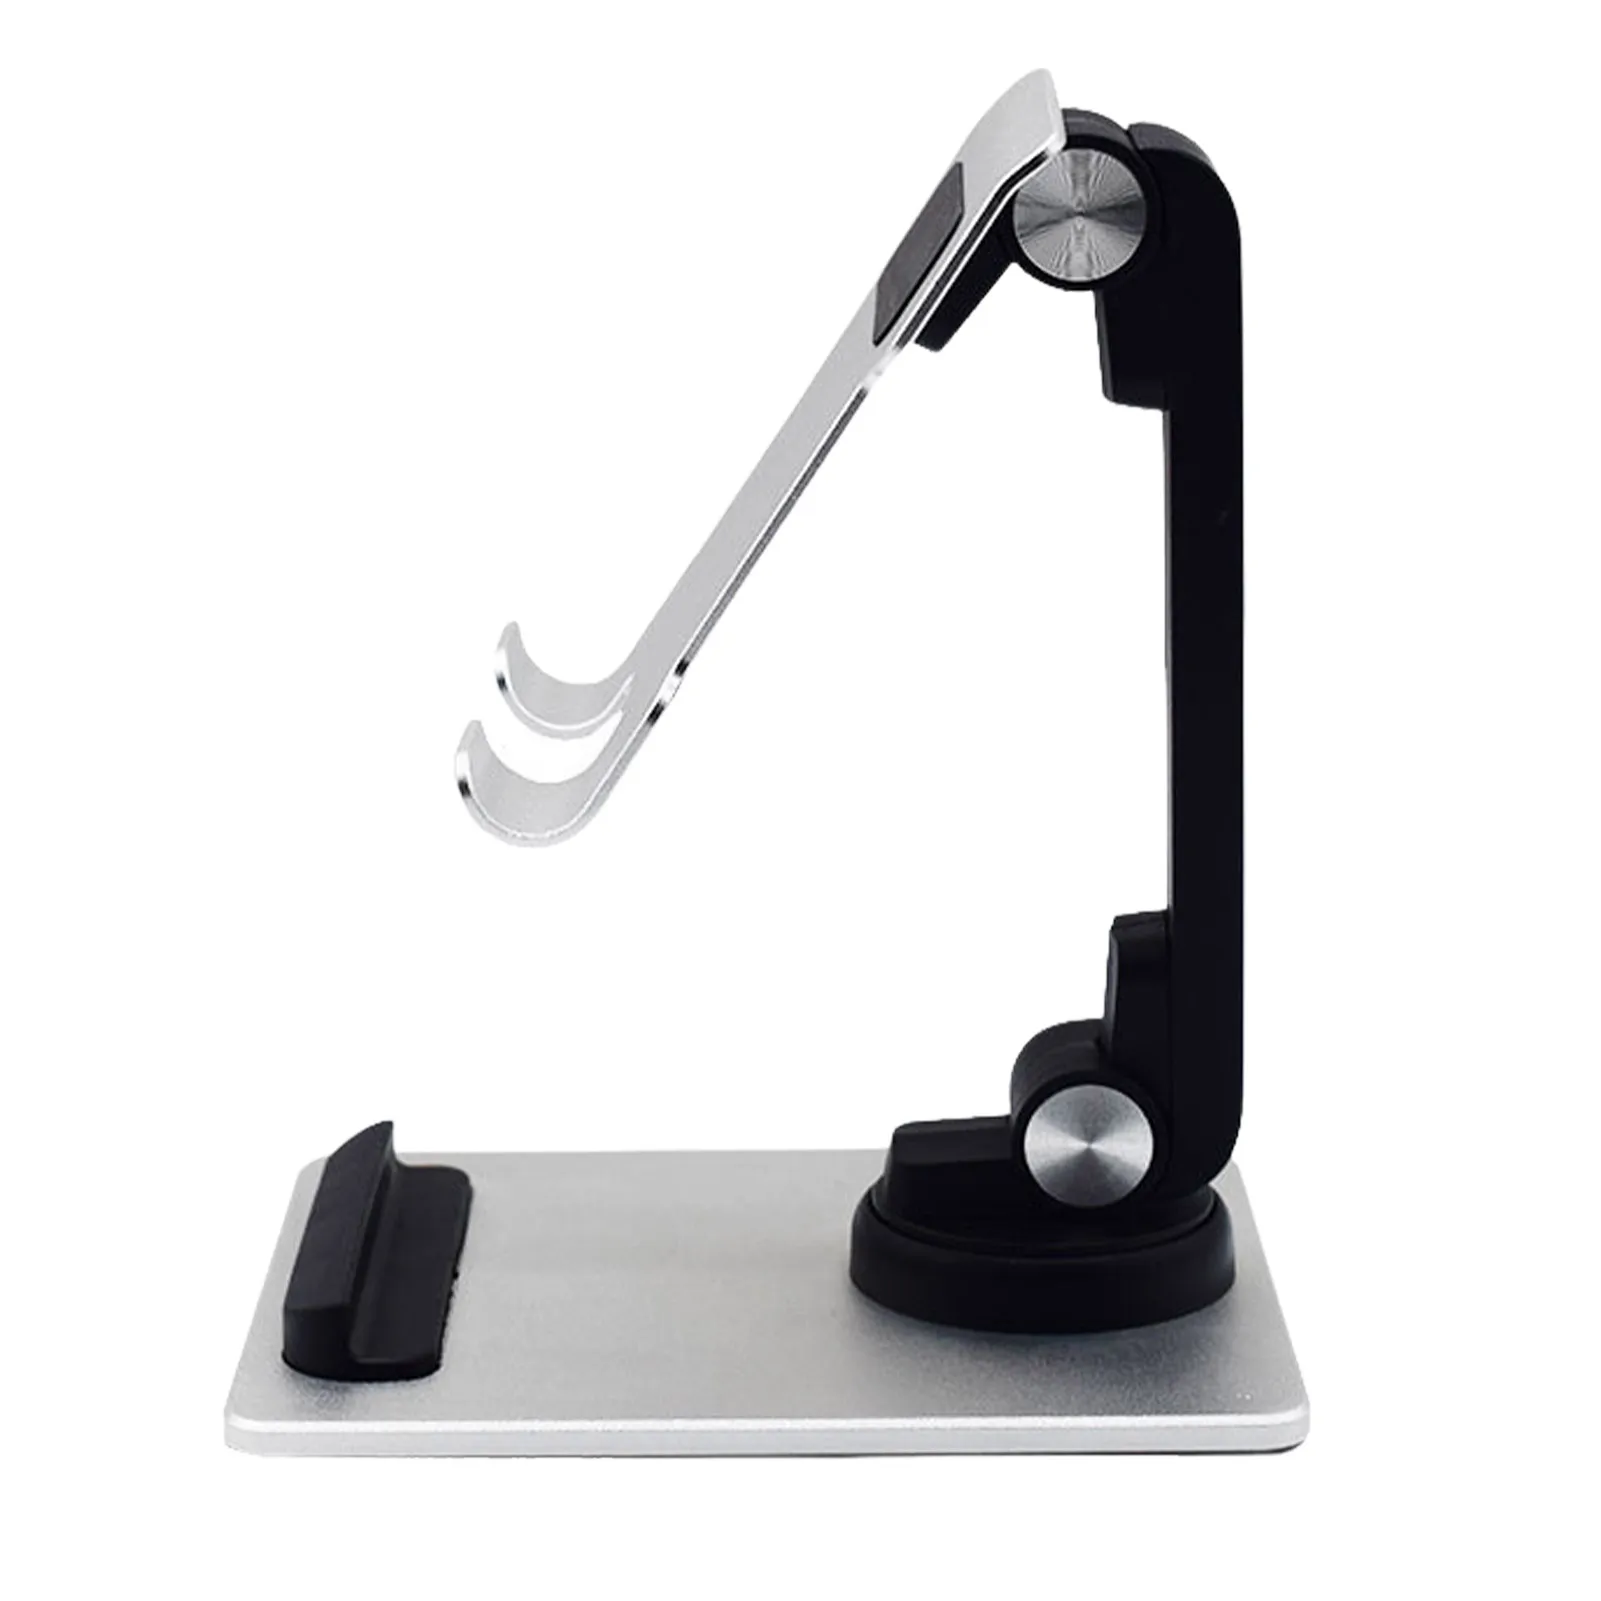 

Tablet Holder Stand Height Adjustable Cell Phone Holder Portable Cellphone Cradle Desktop Dock Universal Stand For Office Desk